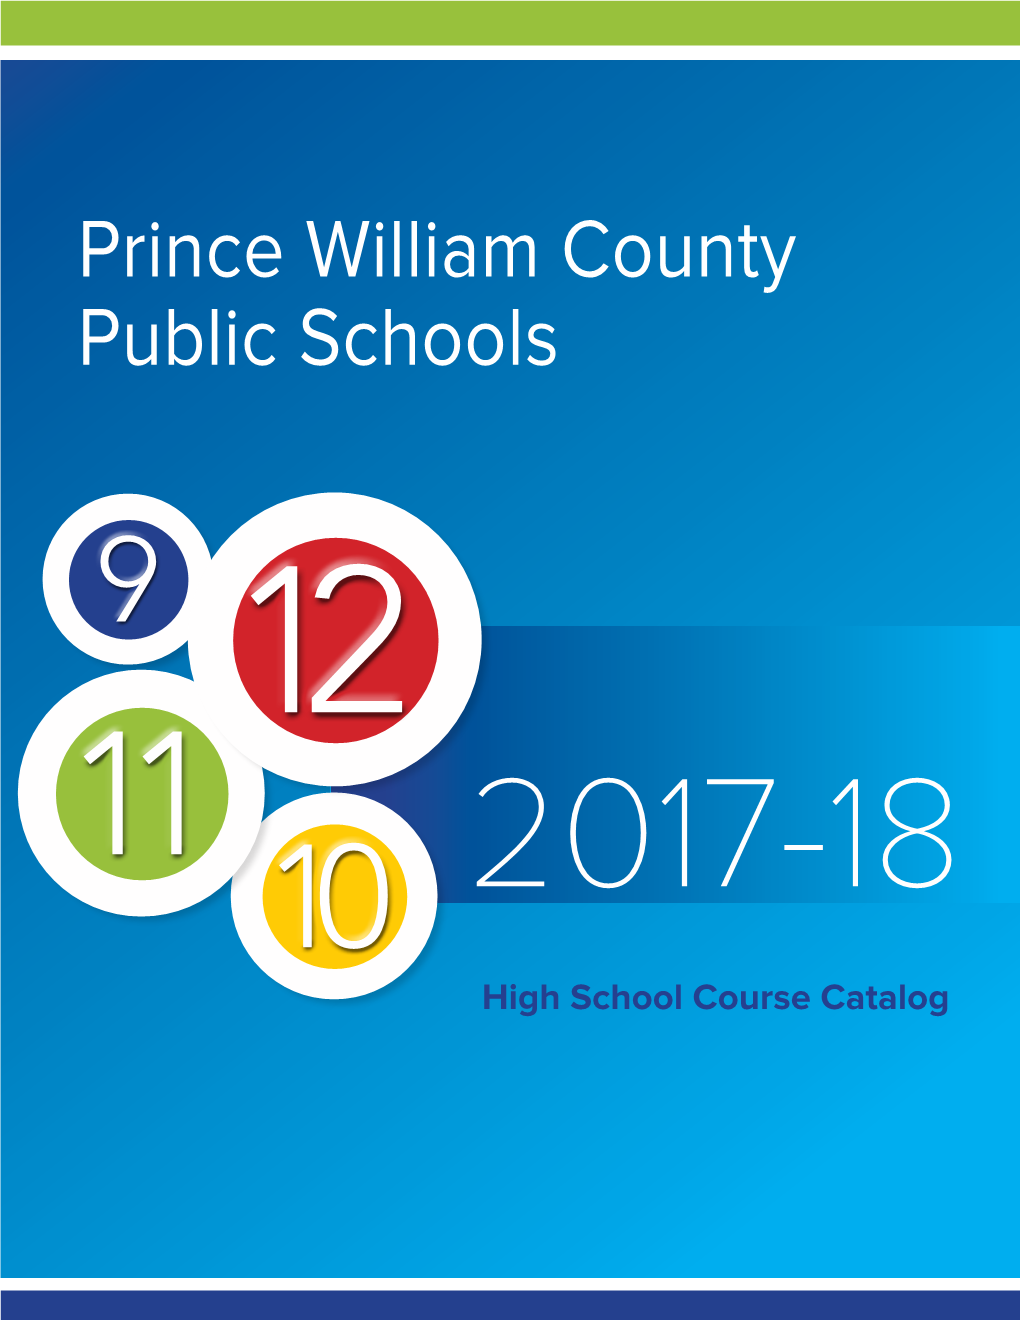 Prince William County Public Schools 9 12 11 10 2017-18 High School Course Catalog Prince William County